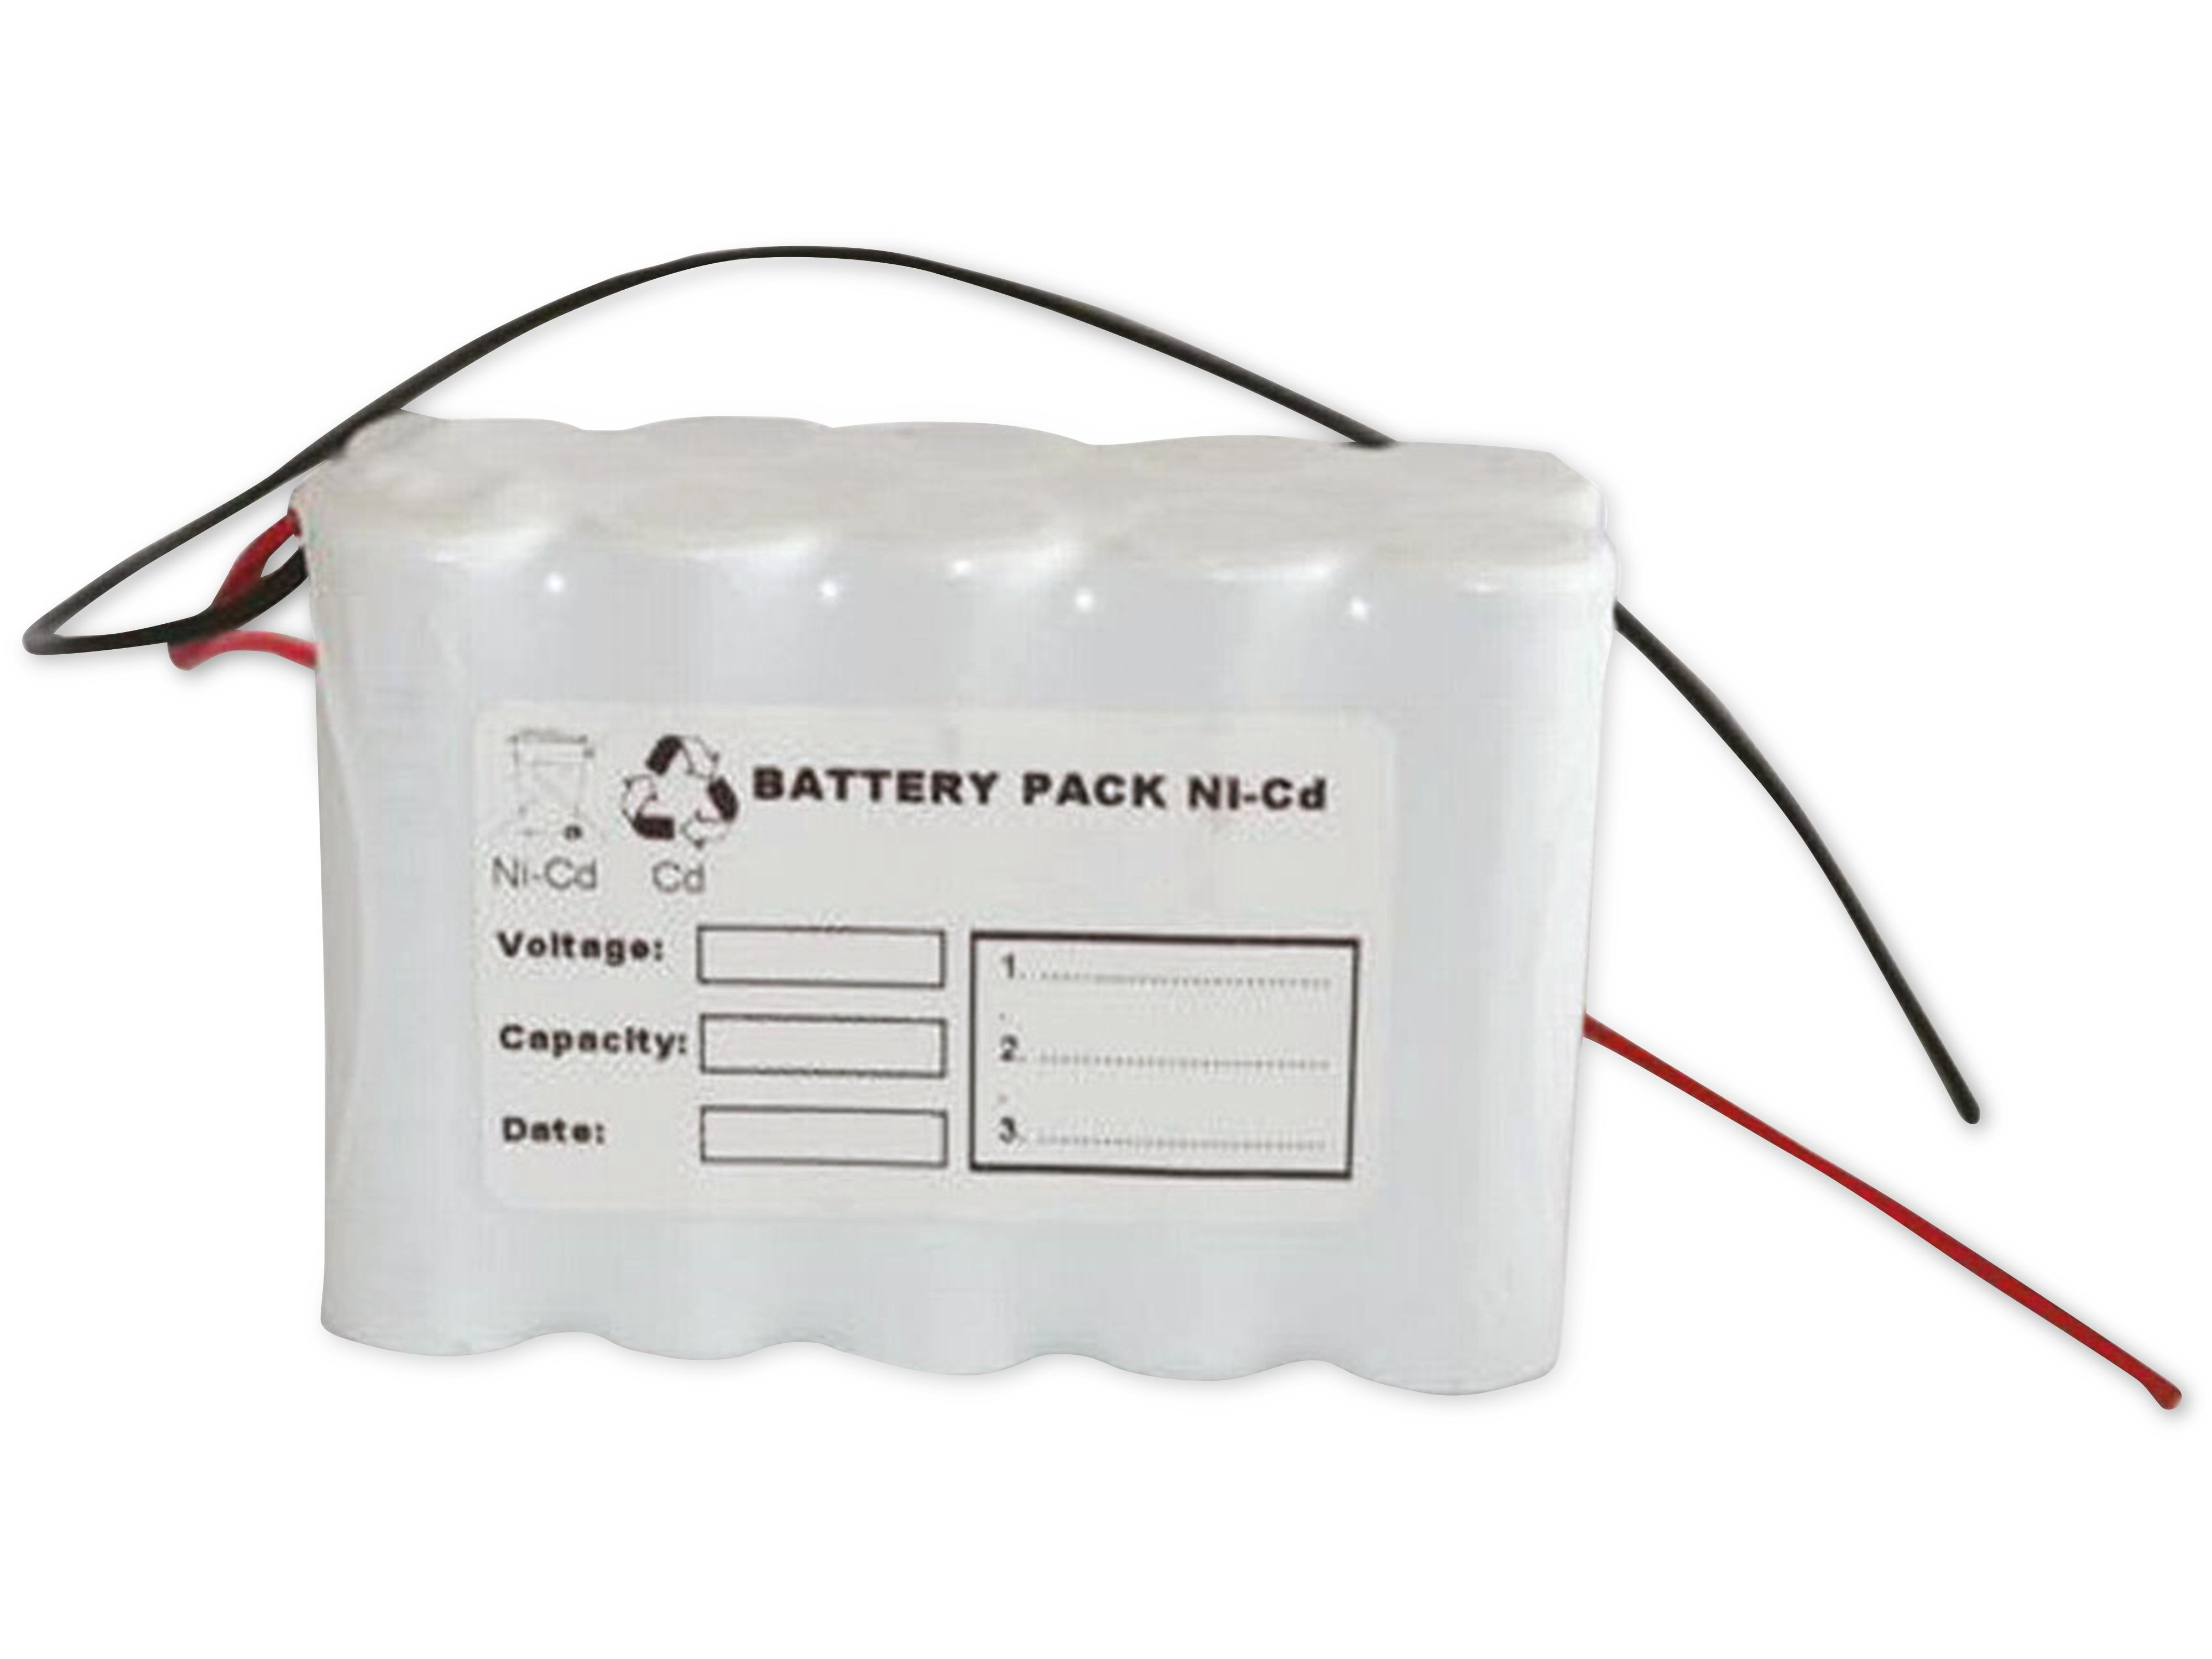 Q-BATTERIES Akku-Pack, 12 HT-Zellen Nickel-Cadmium NiCd V, F5x2, mit Kabel 10xAA Akku-Pack 800mAh